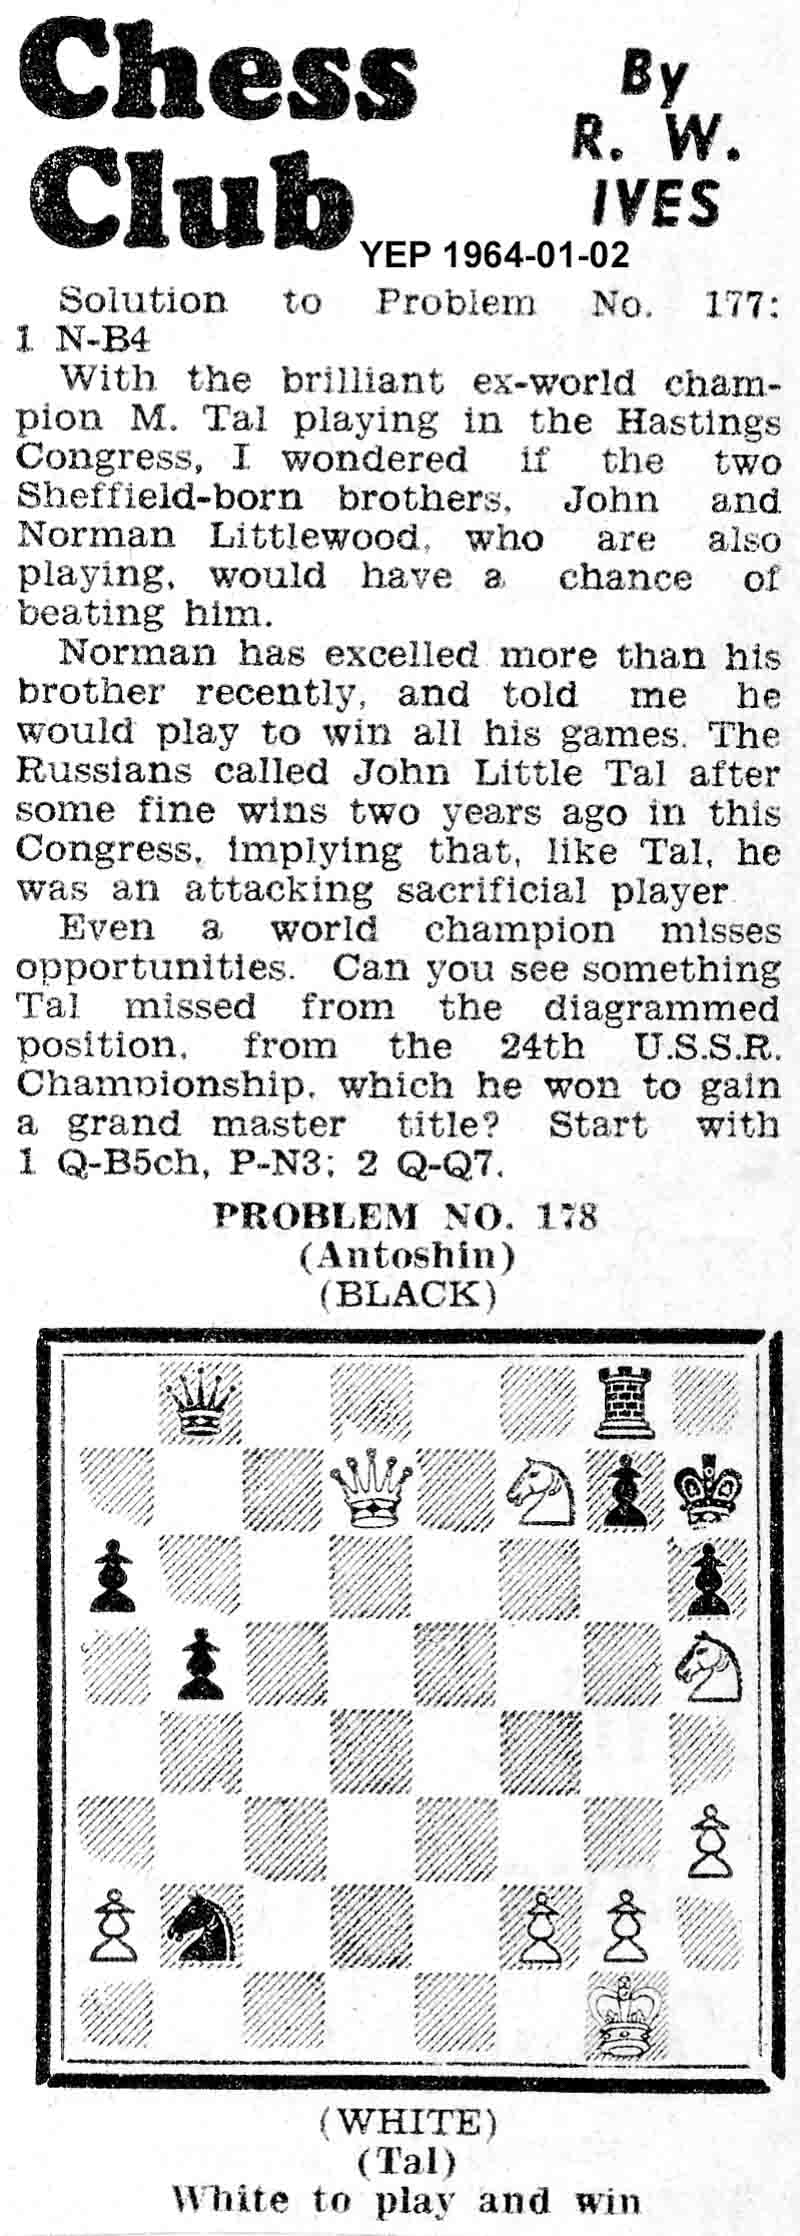 2 January 1964, Yorkshire Evening Post, chess column